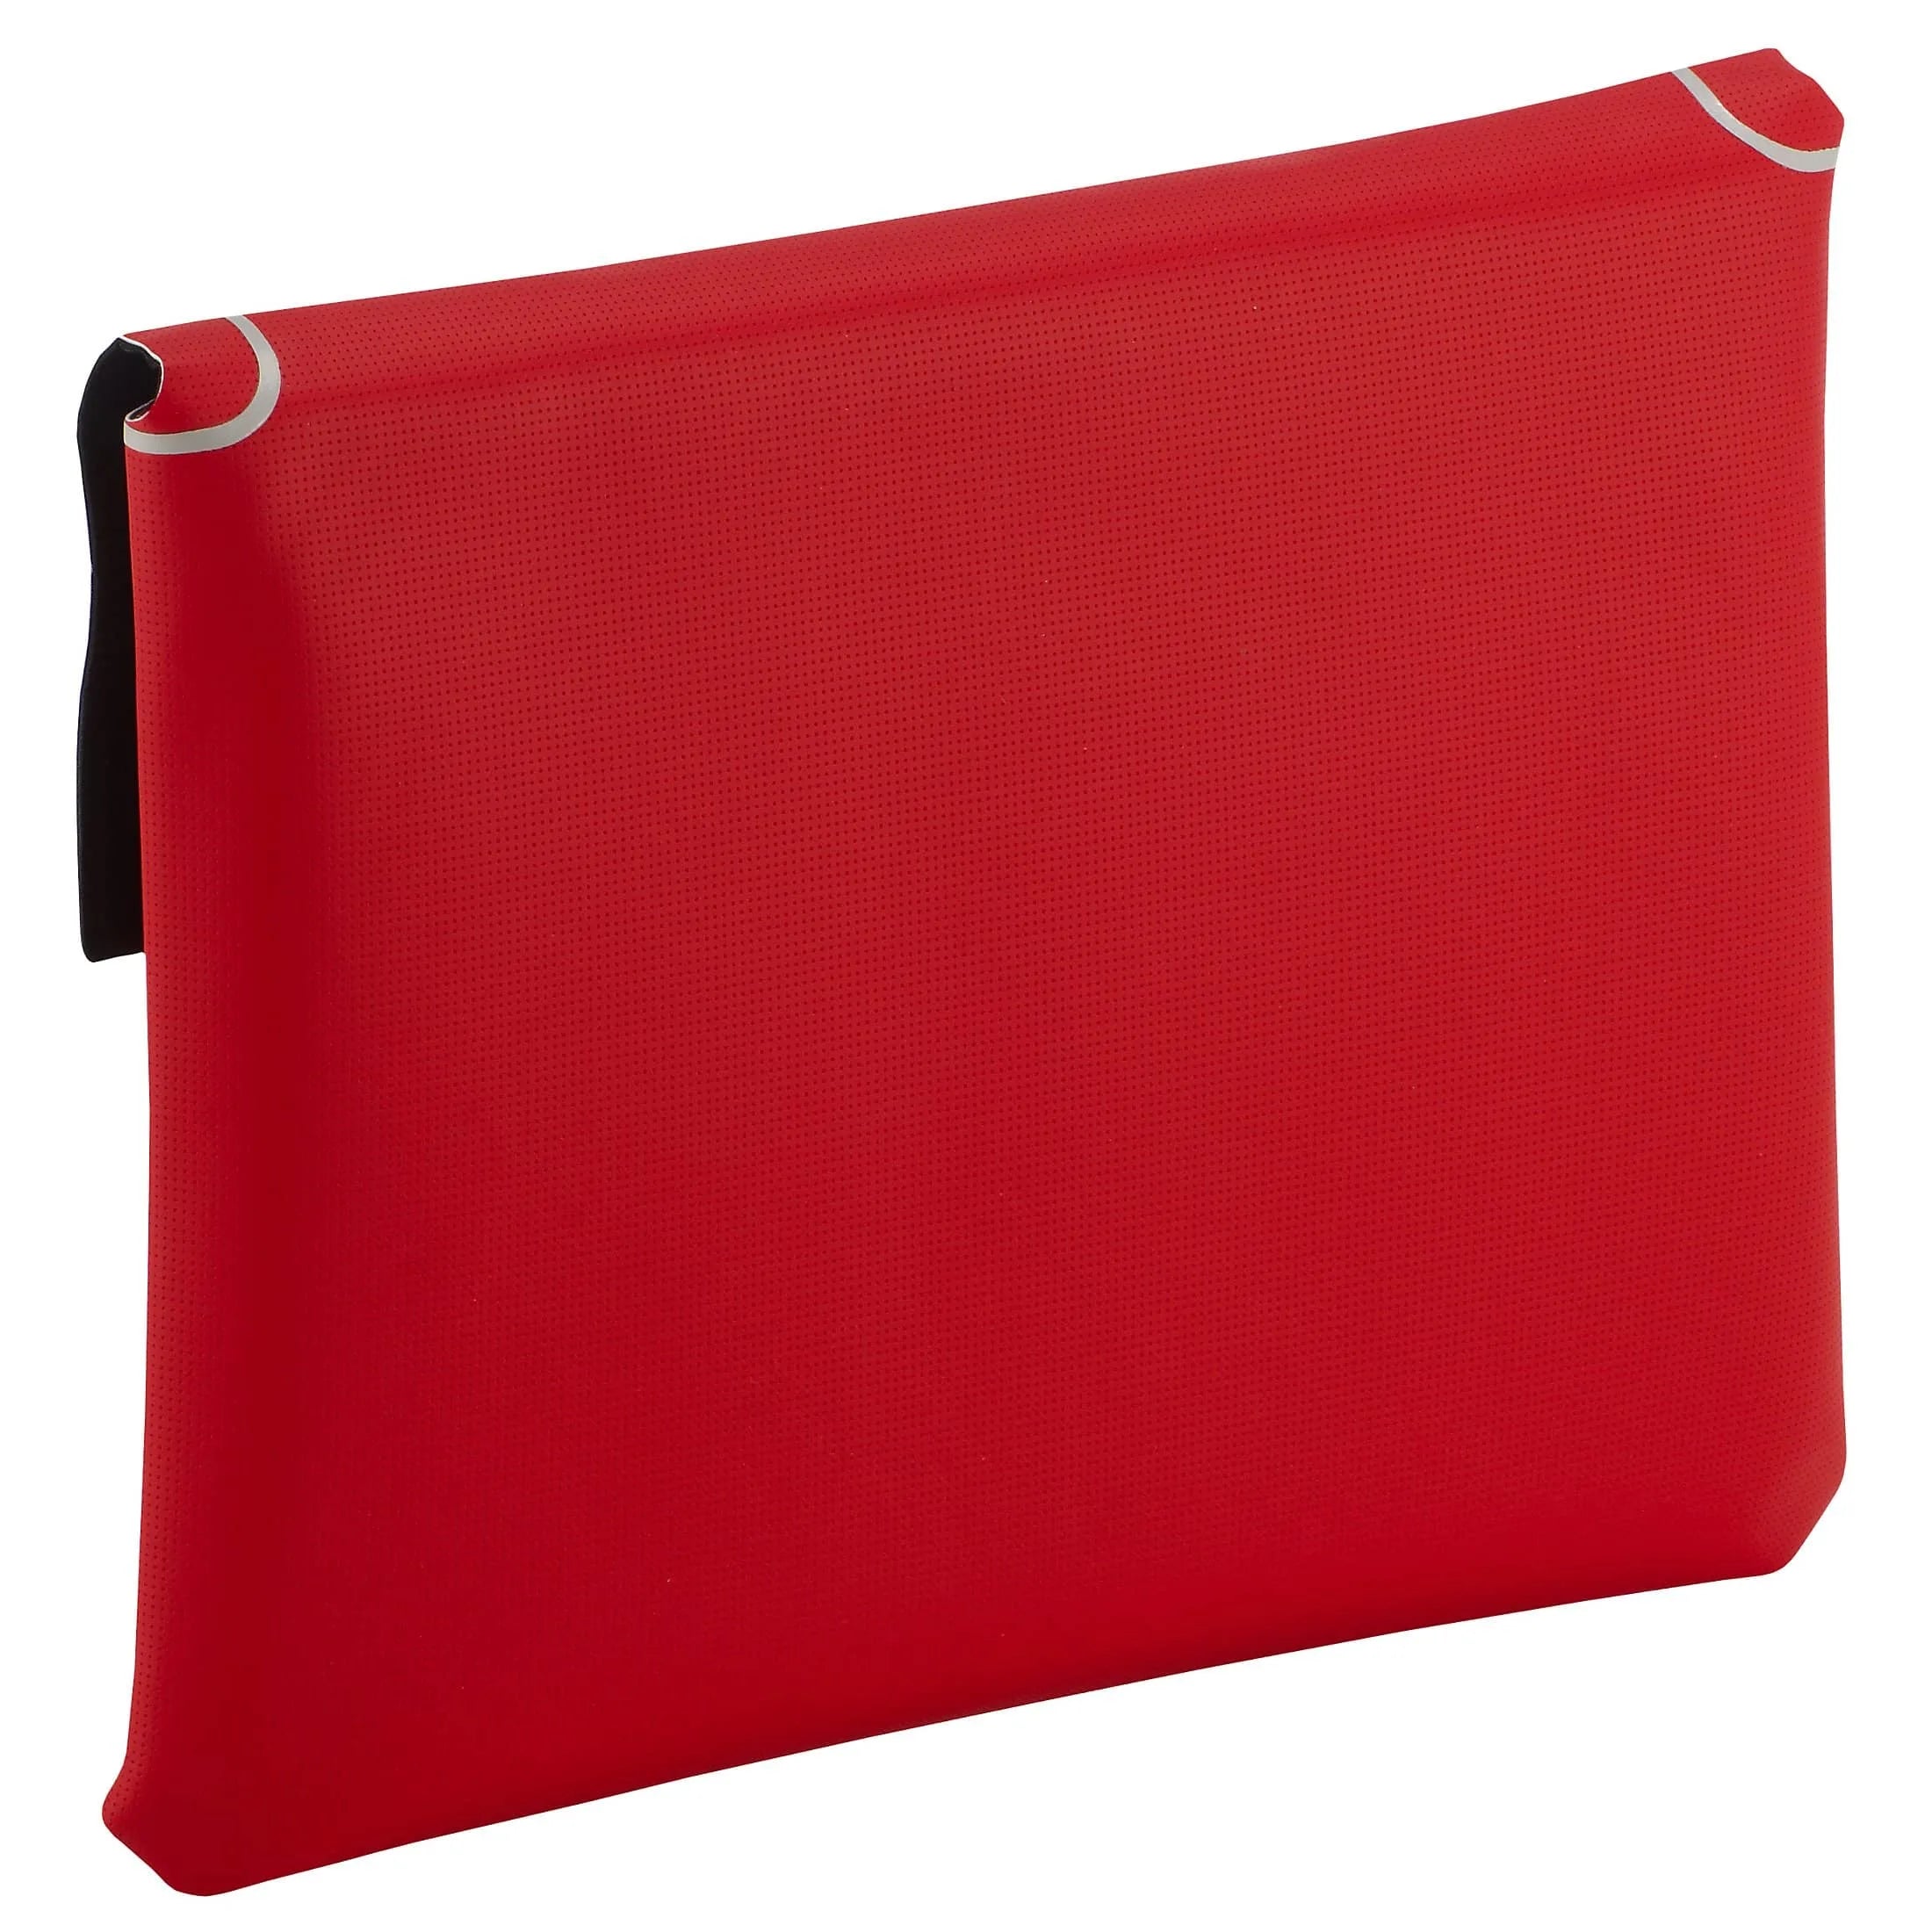 Samsonite Thermo Tech laptop sleeve 38 cm - red/grey